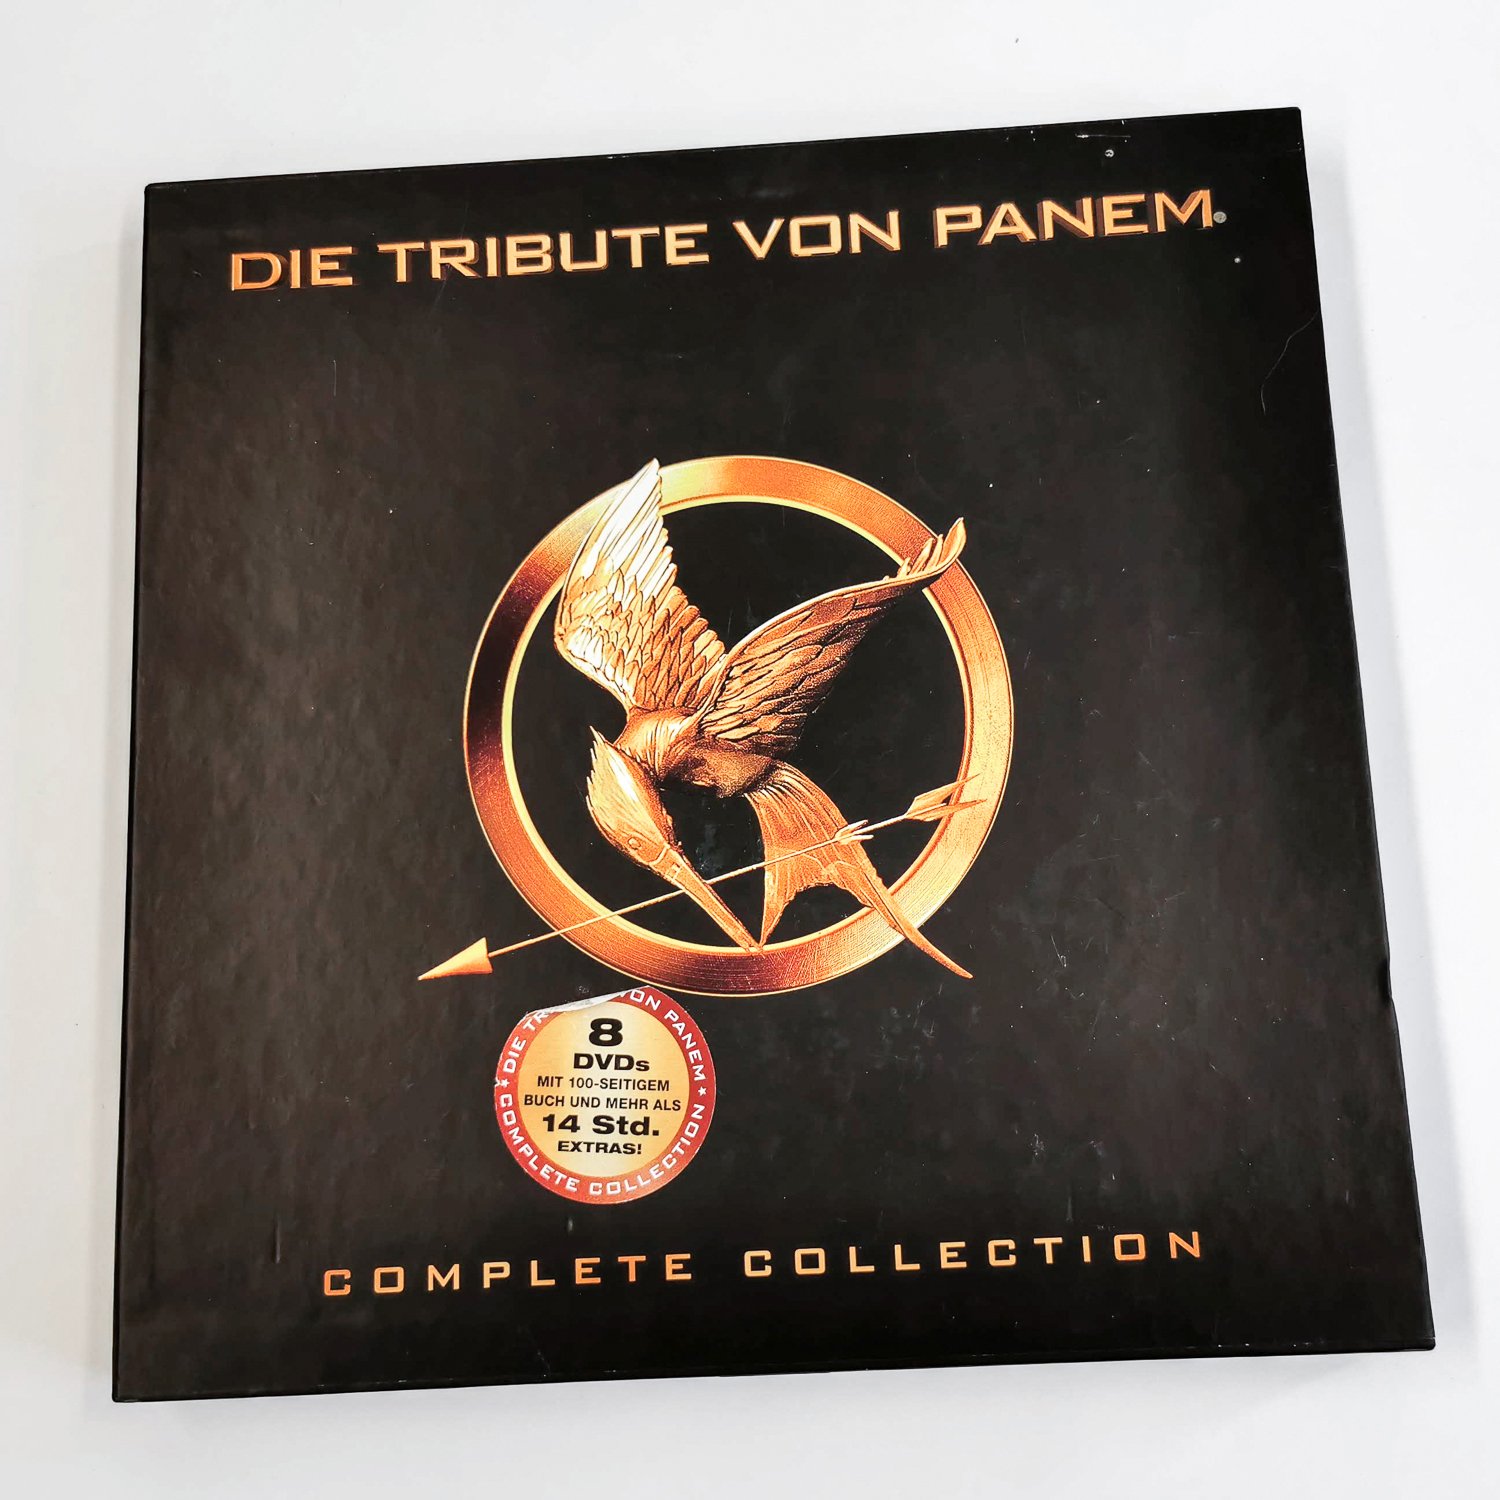 Die Tribute von Panem (Complete Collection Limited Edition)